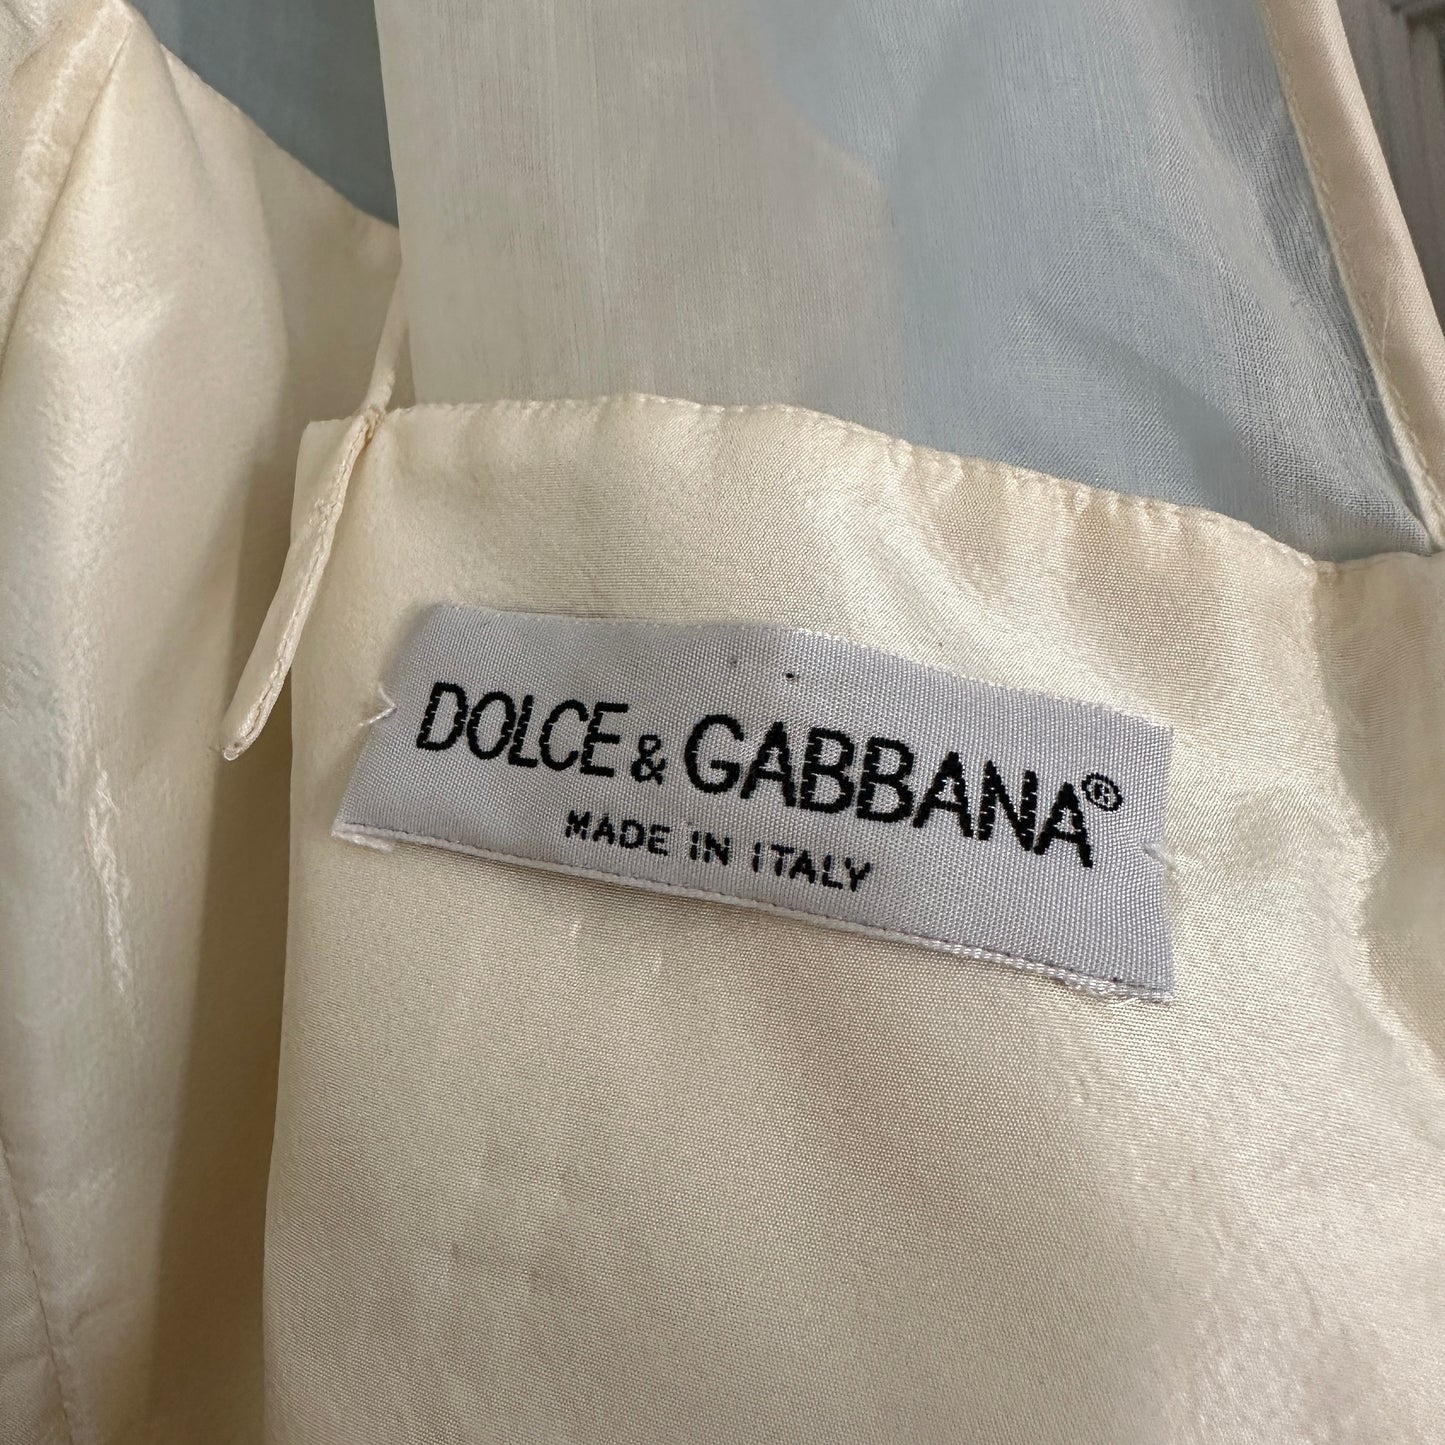 Dolce & Gabbana 1990’s Silk Balloon Skirt Wedding Dress